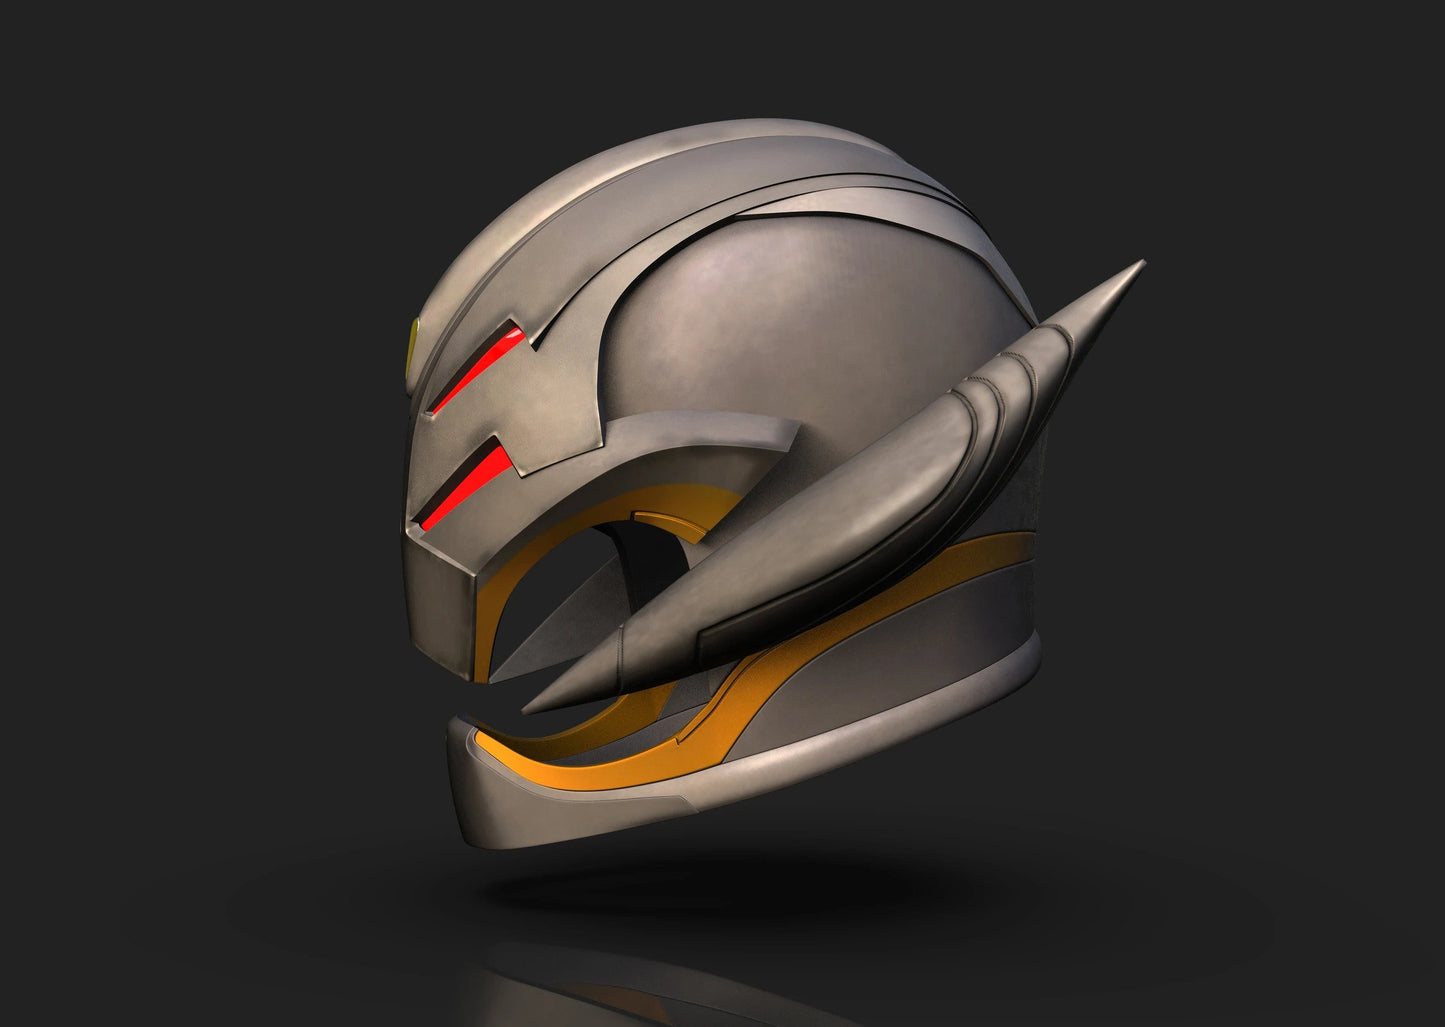 Ultron What If Cosplay Helmet